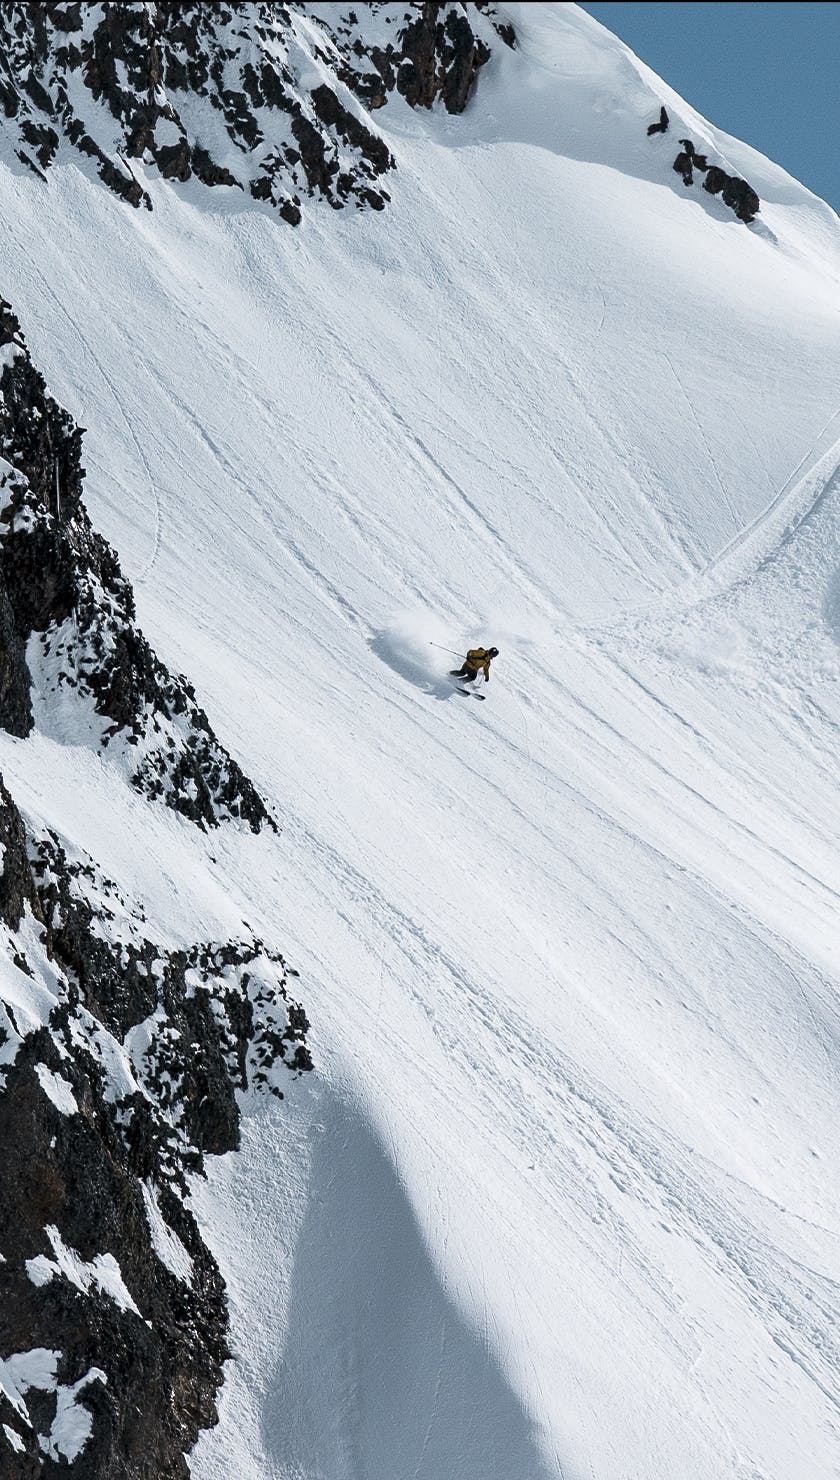 Black Diamond Athlete Tobin Seafel skiing in British Columbia, Canada. 